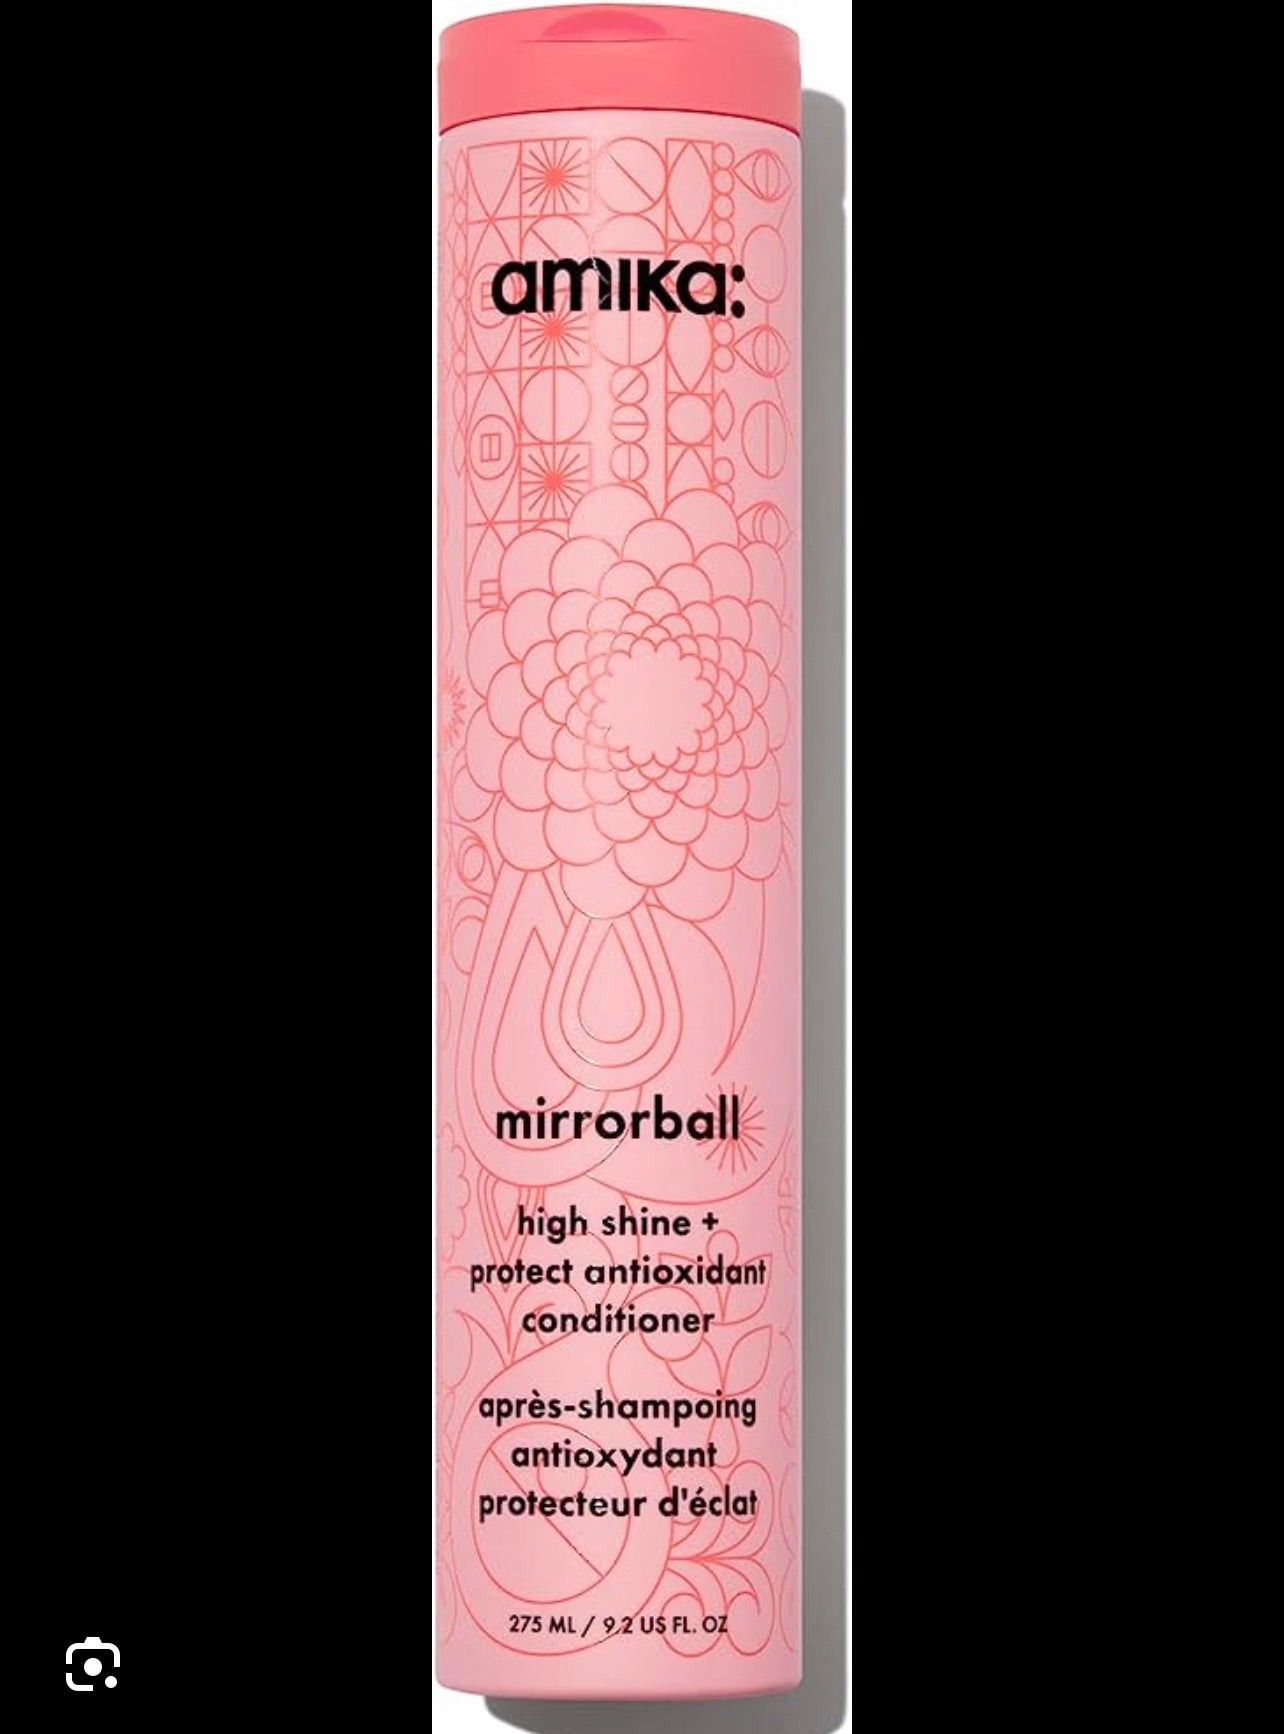 Amika Mirrorball high shine + protect antioxidant conditioner